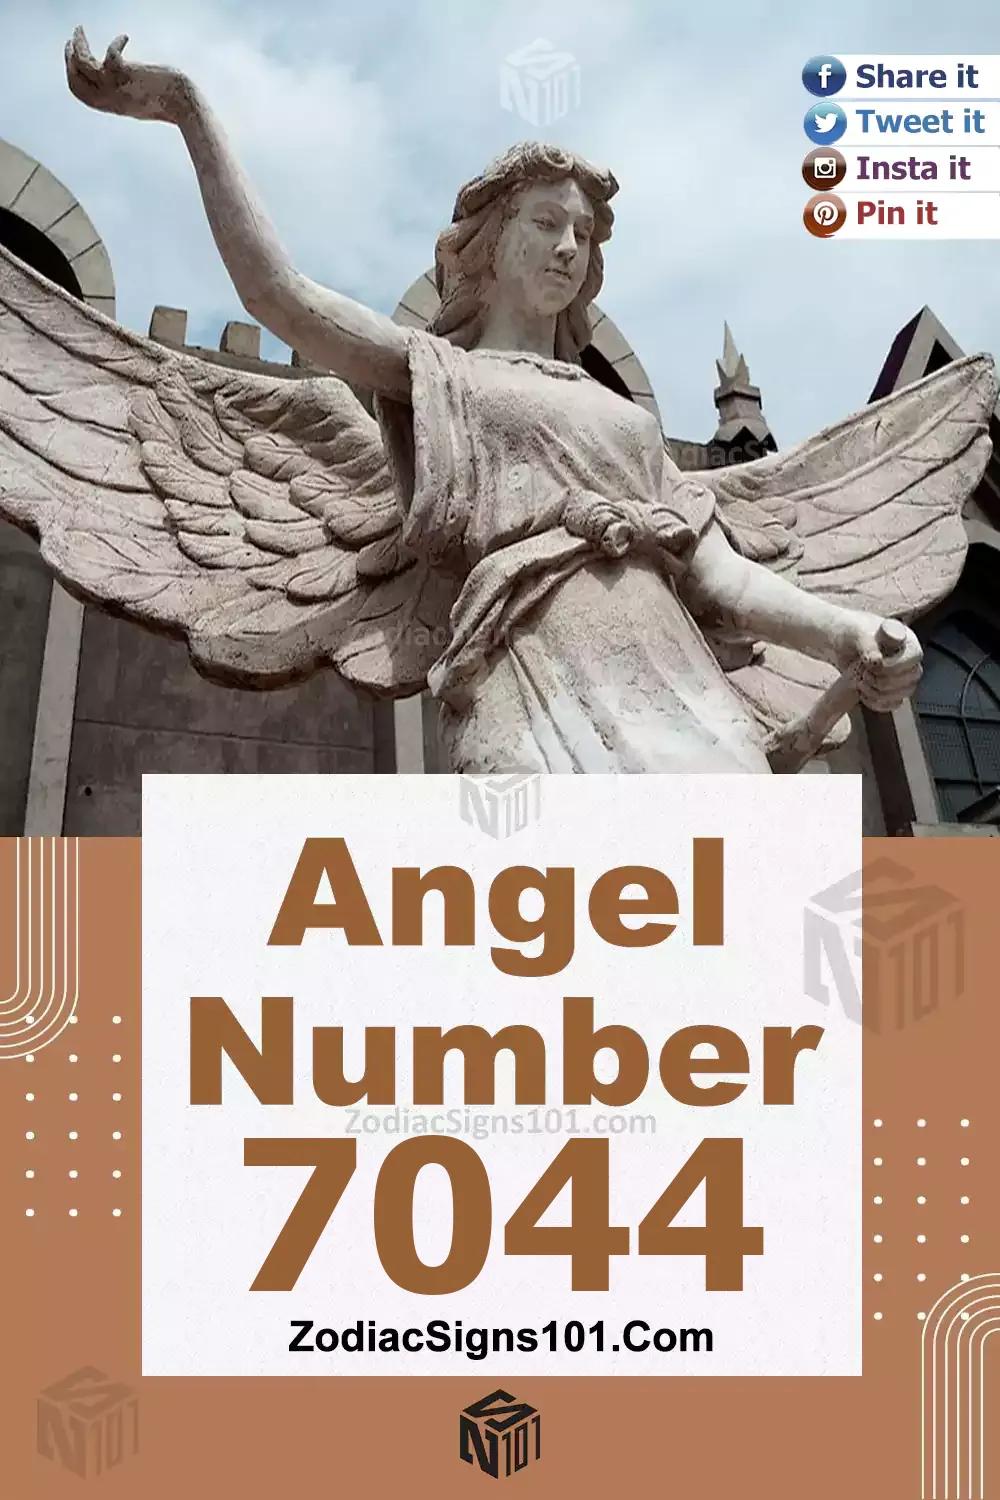 7044-Angel-Number-Meaning.jpg